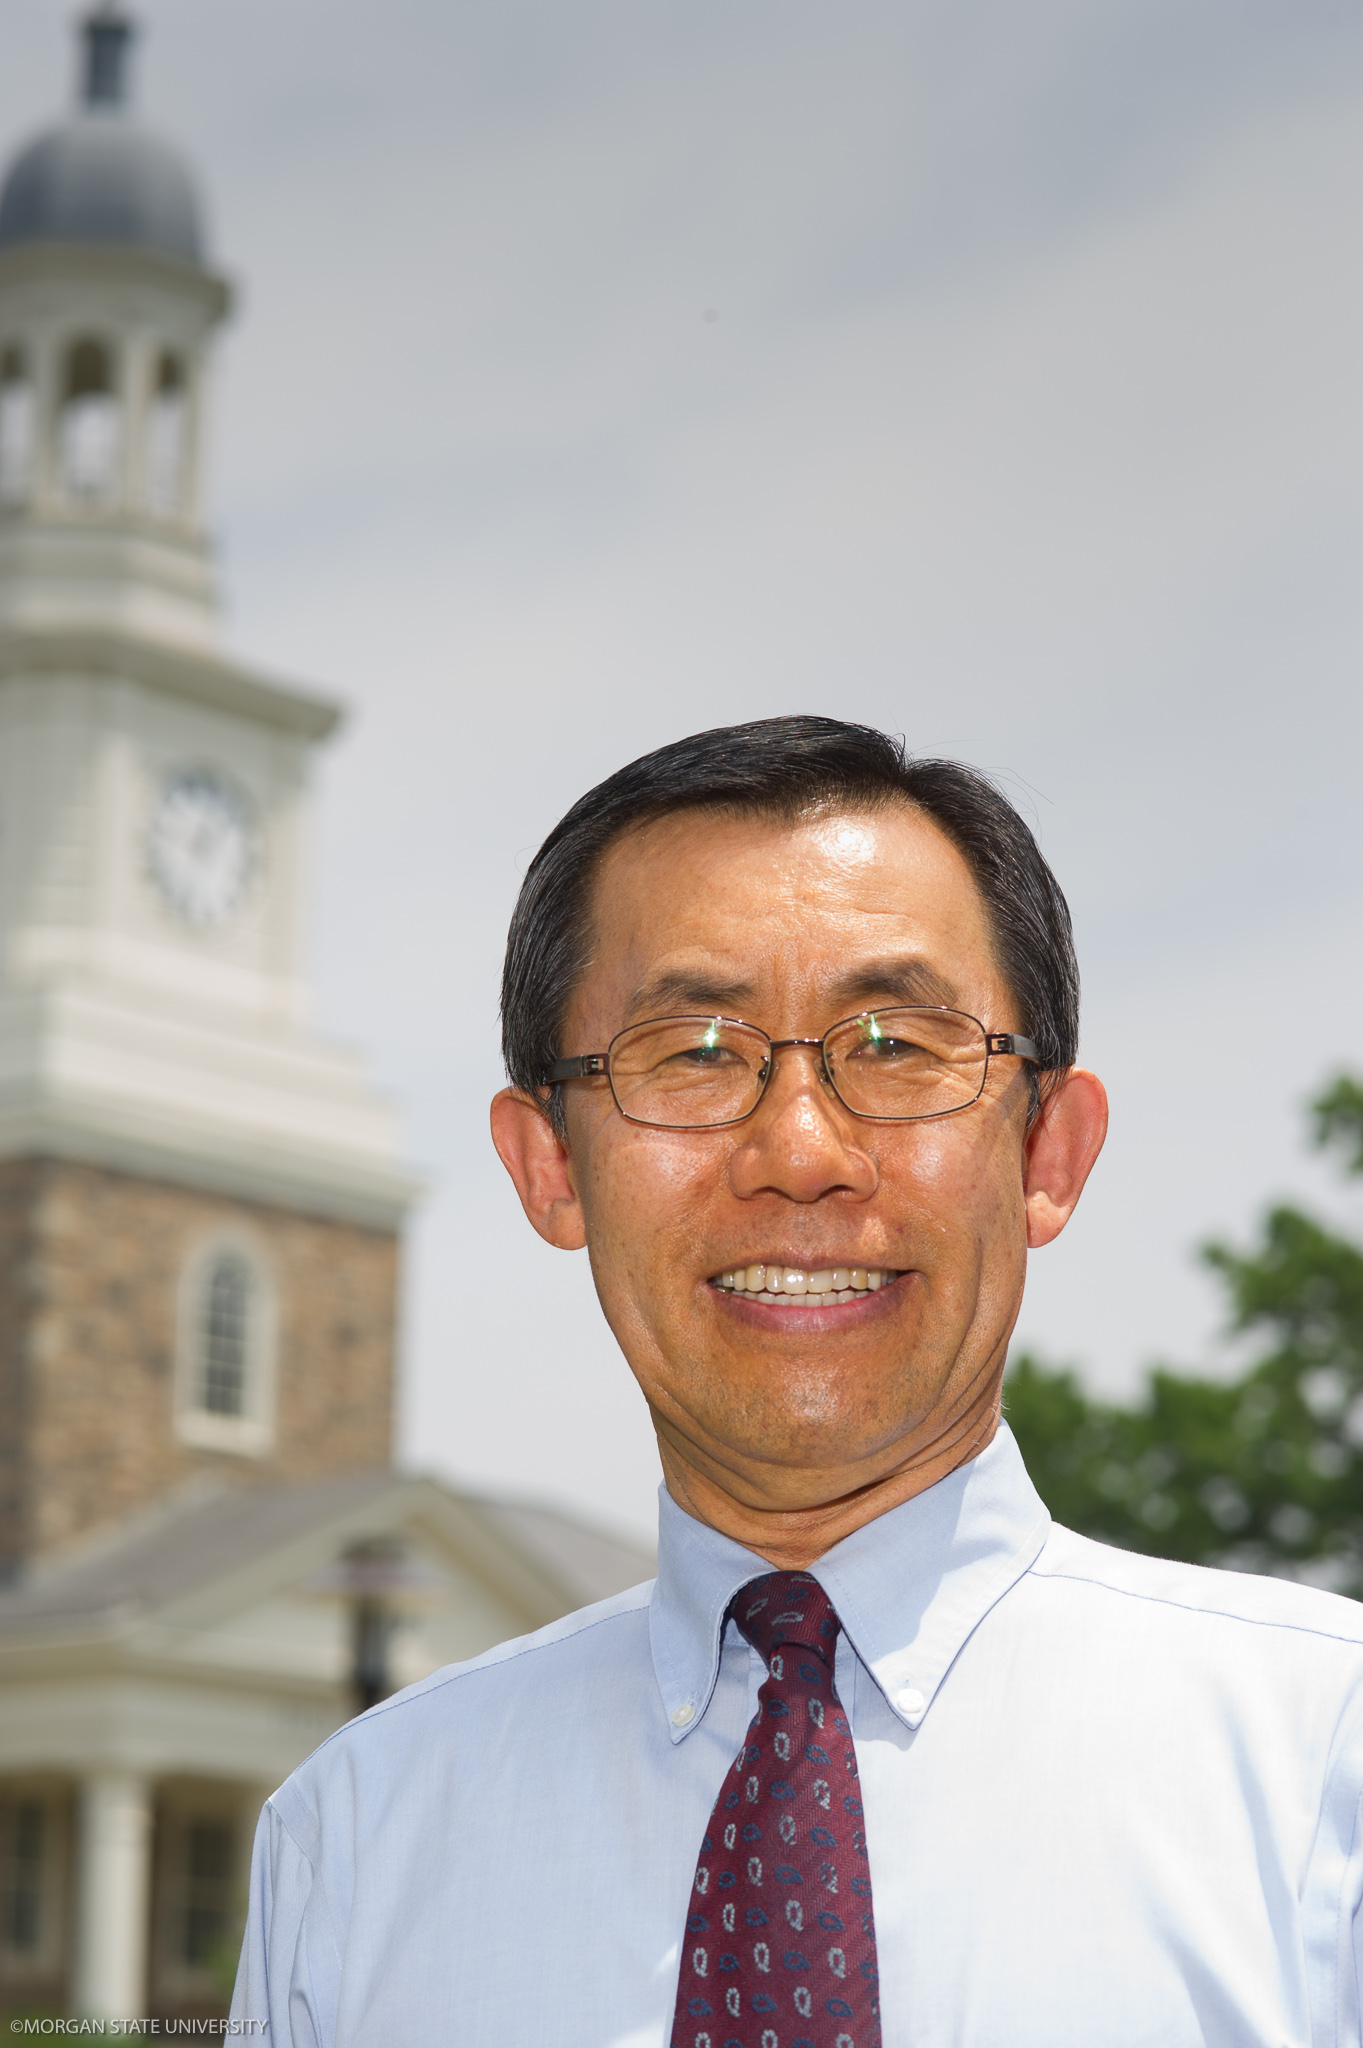 Dr. Seong W. Lee